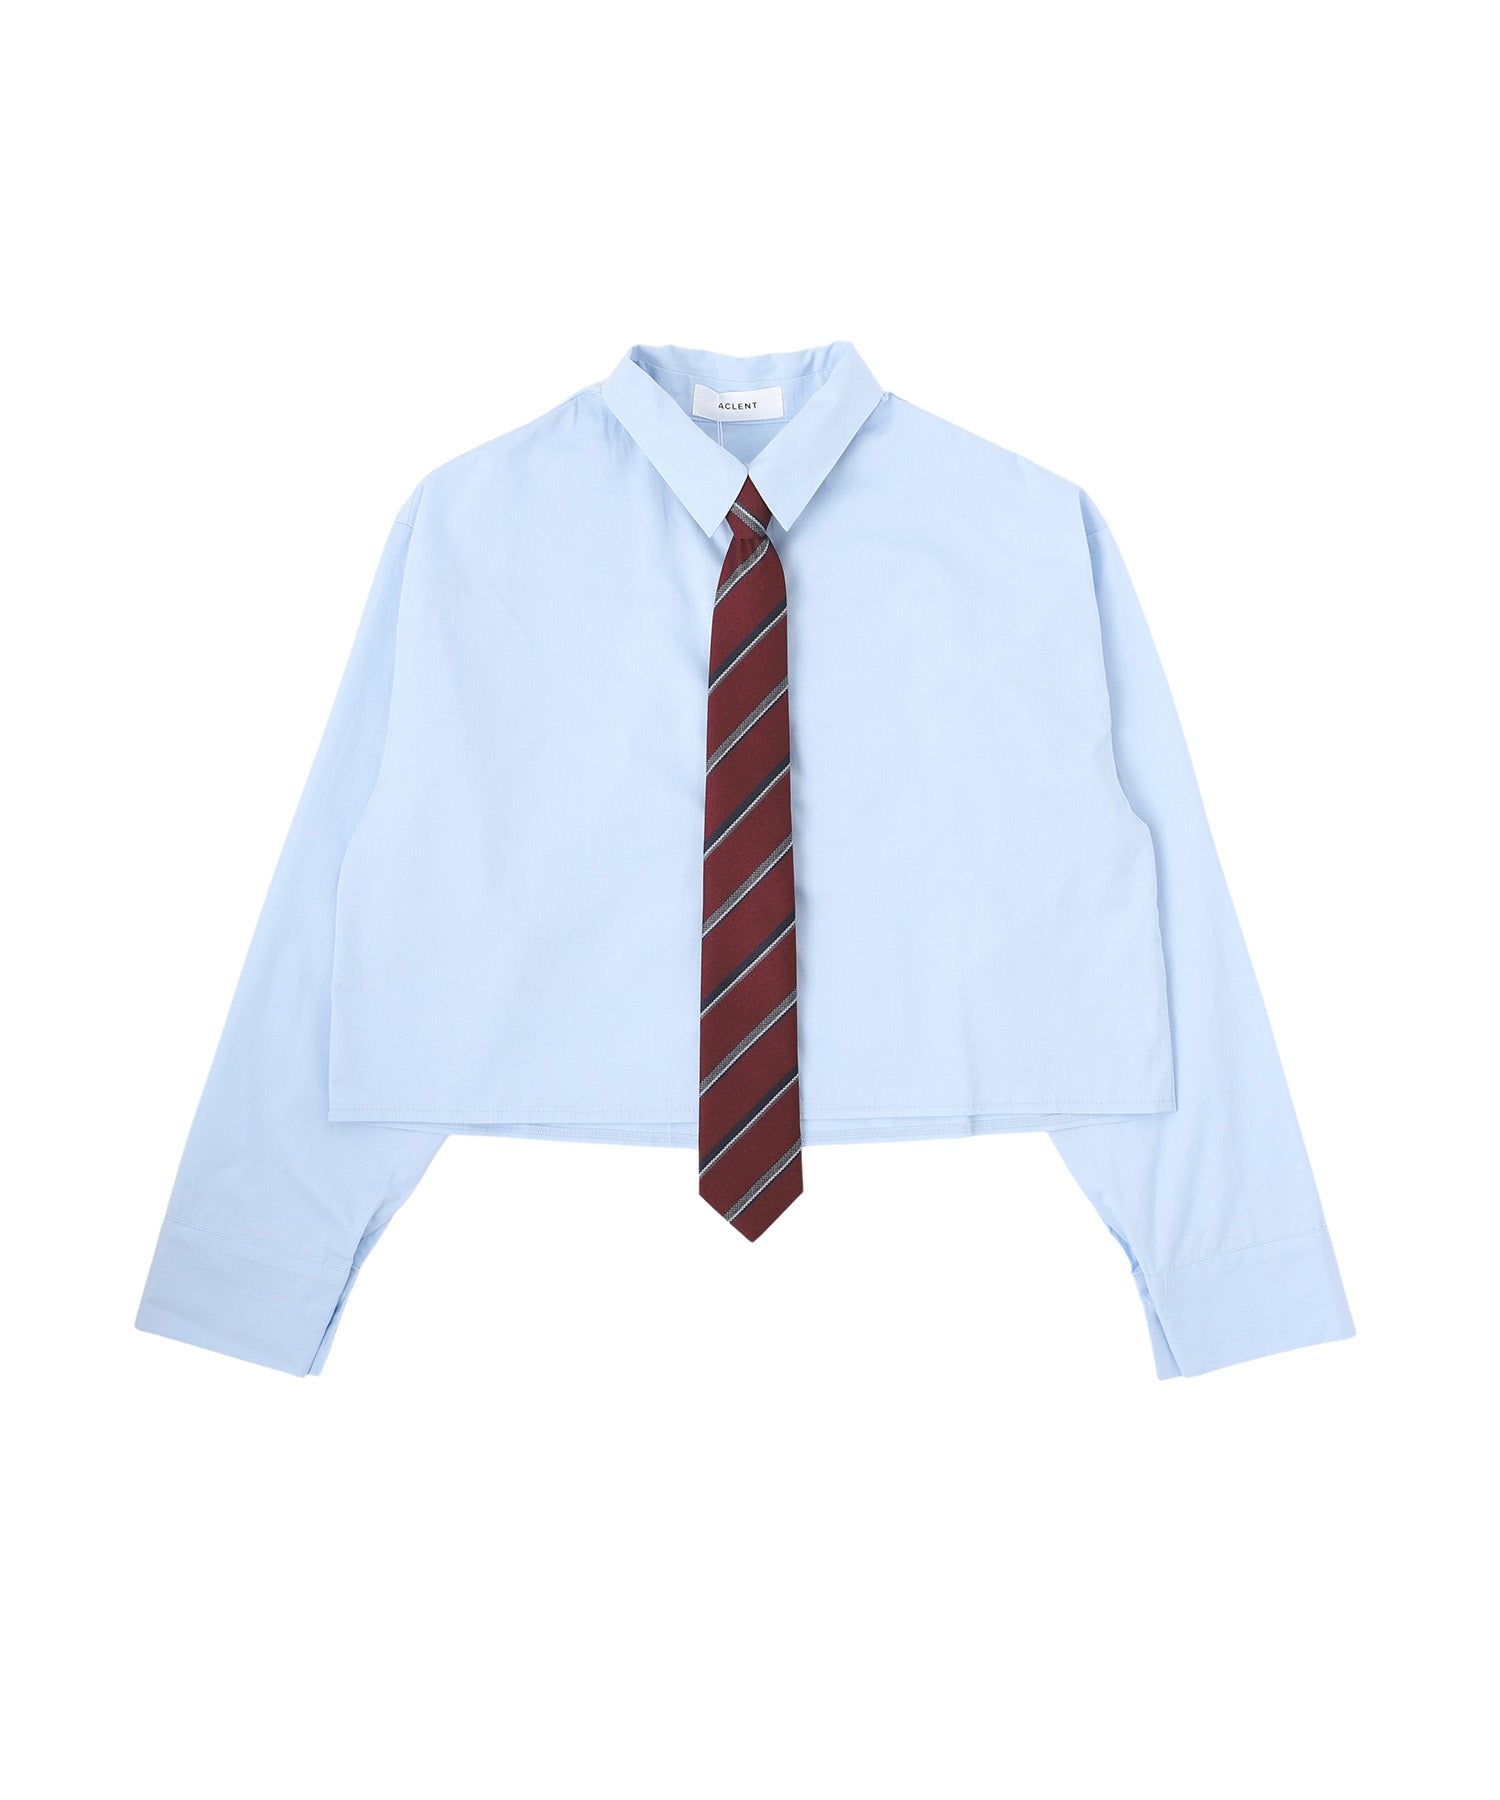 Tie set short shirt